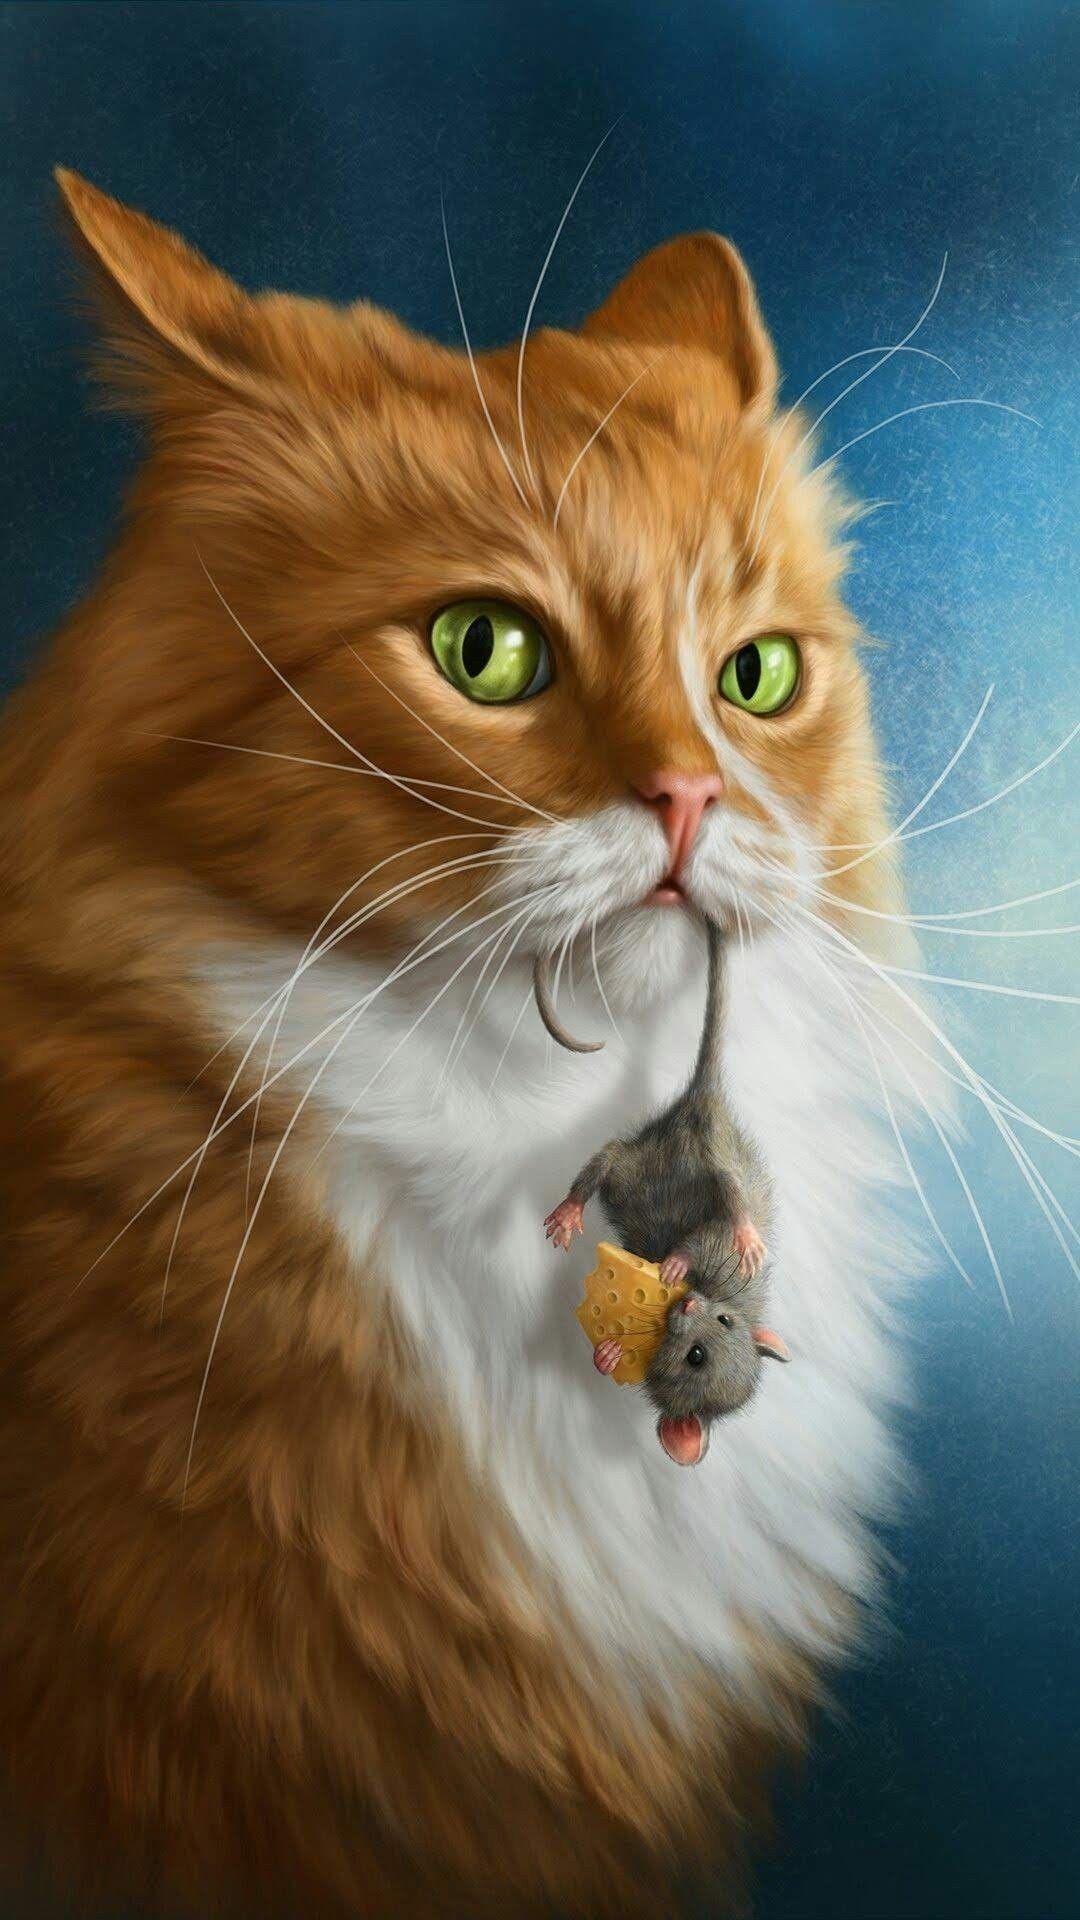 1080 x 1920 · jpeg - Pin by Ekaterina Savina on GATOS | Cat art, Cats illustration, Cute ...